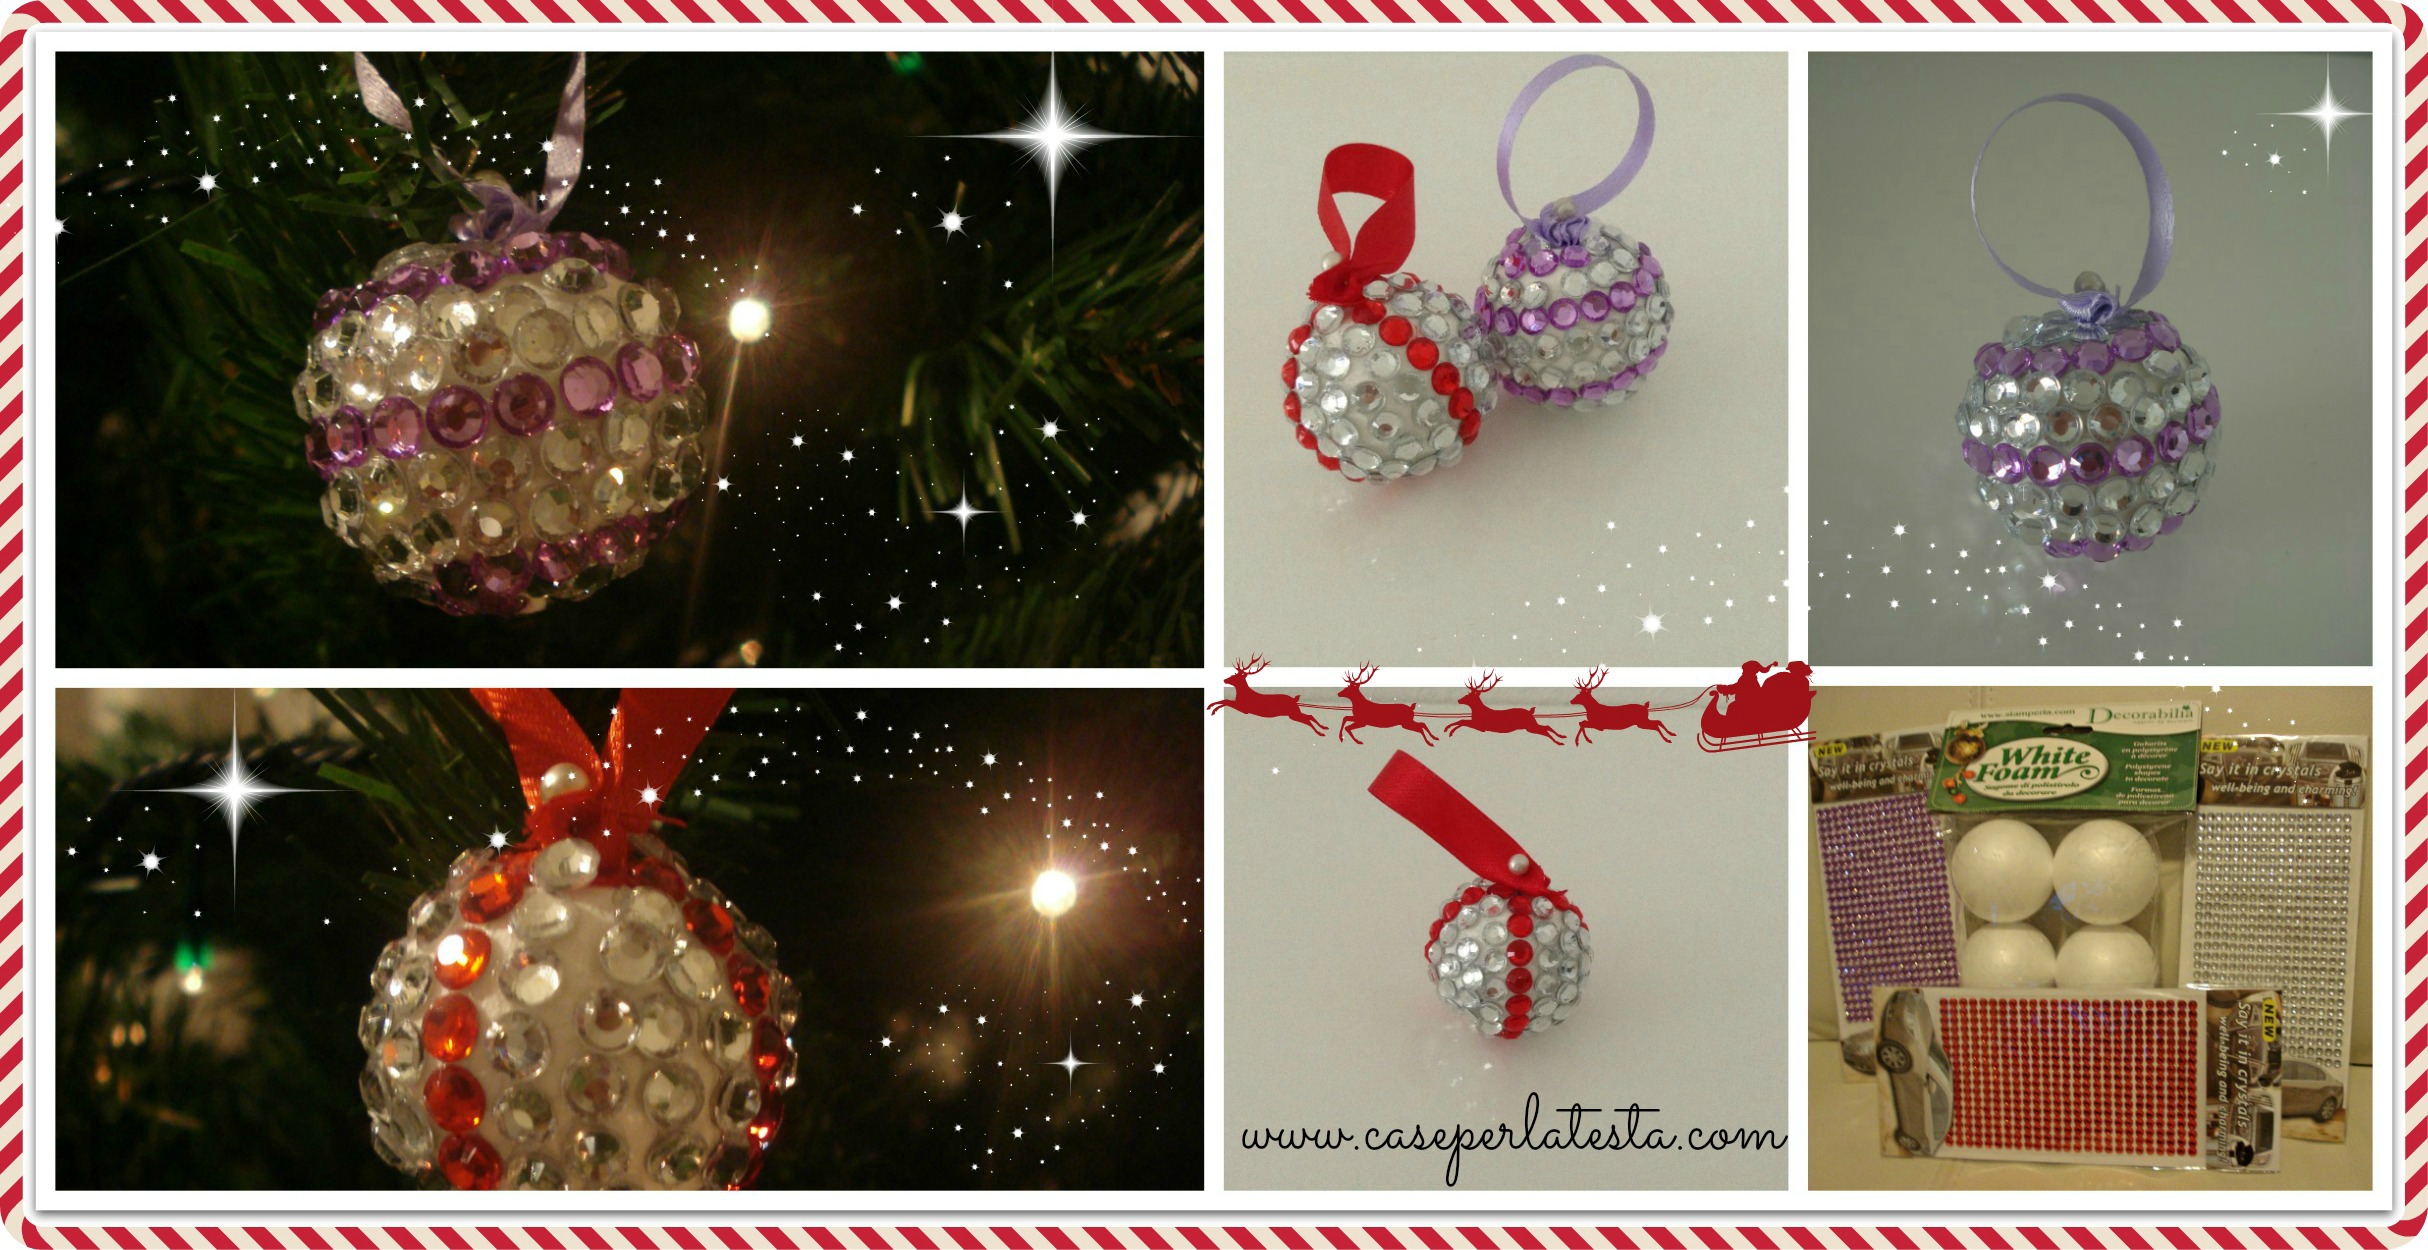 Regali Di Natale Swarovski.Palline Per Albero Di Natale In Finti Swarovski Christmas Tree Decoration With Fake Swarovski Beads Caseperlatesta